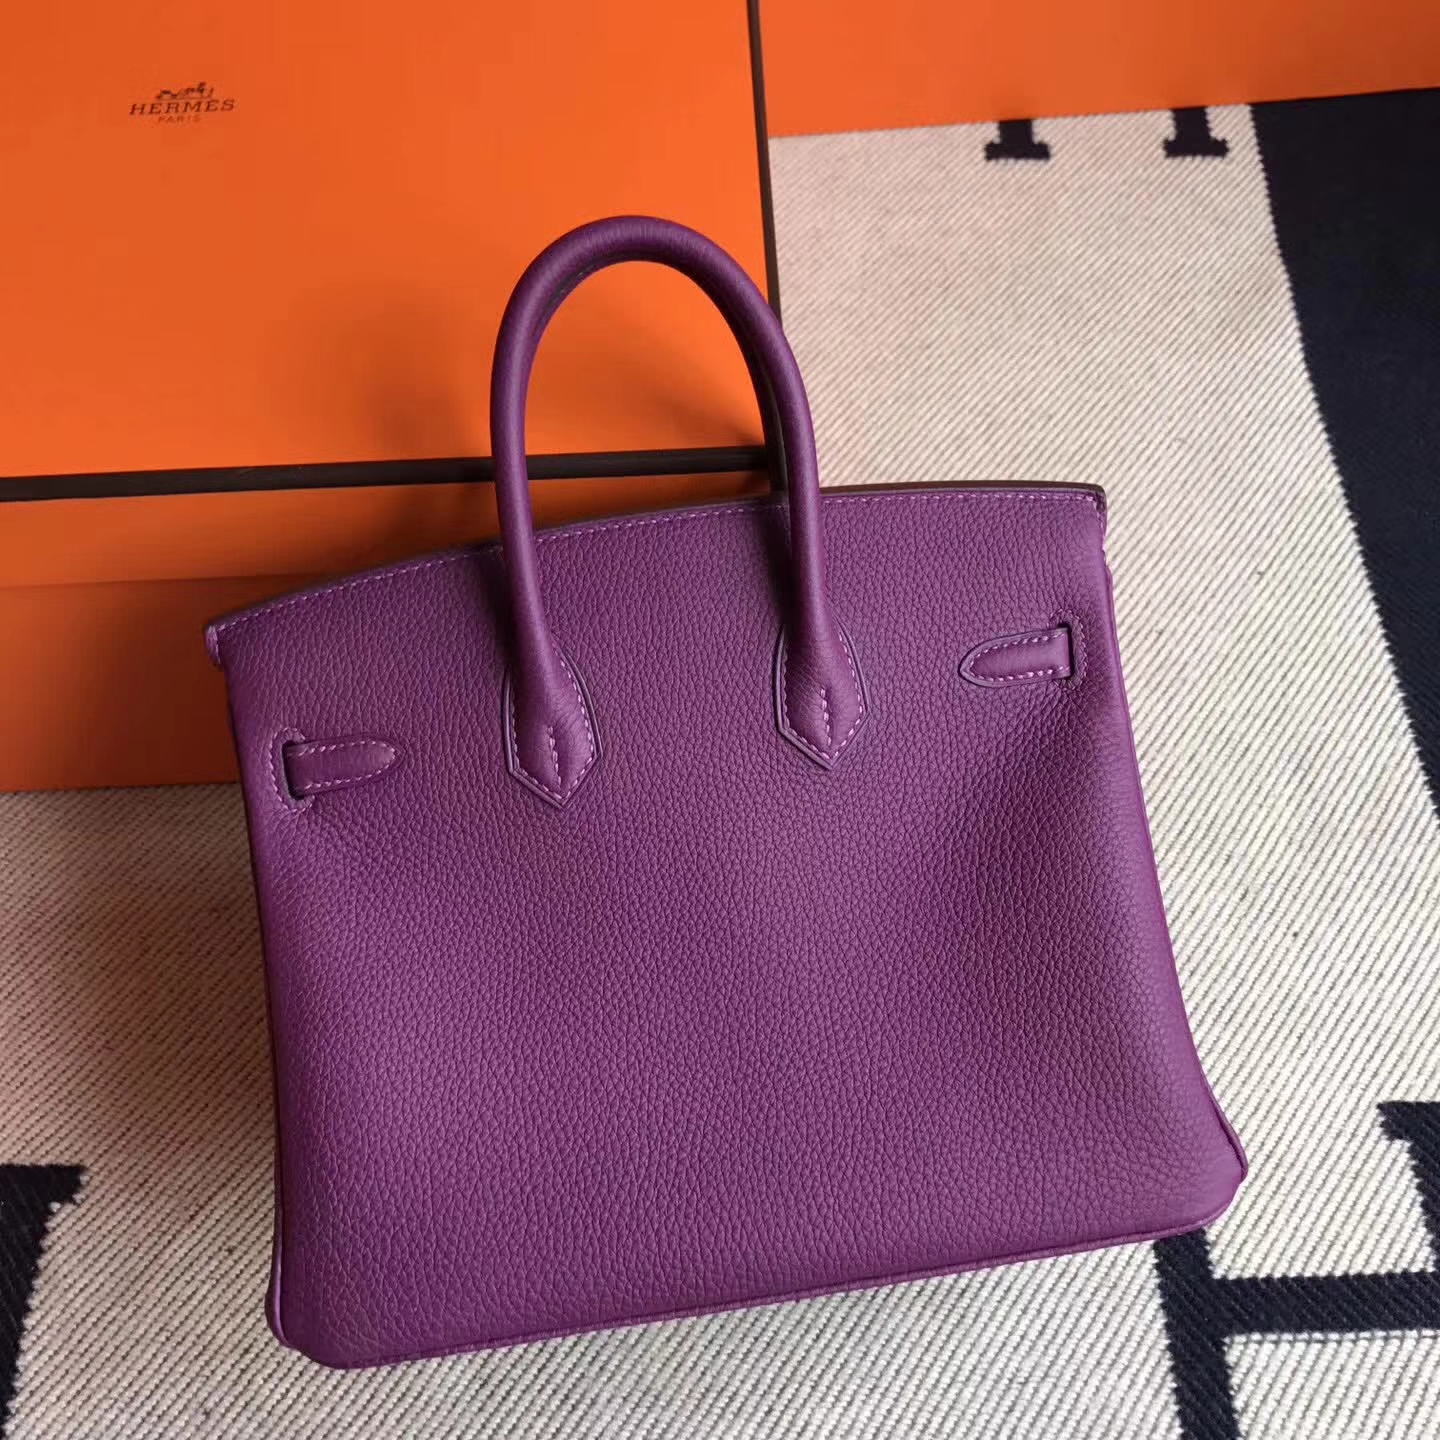 Discount Hermes P9 Amenone Purple Togo Leather Birkin25cm Bag